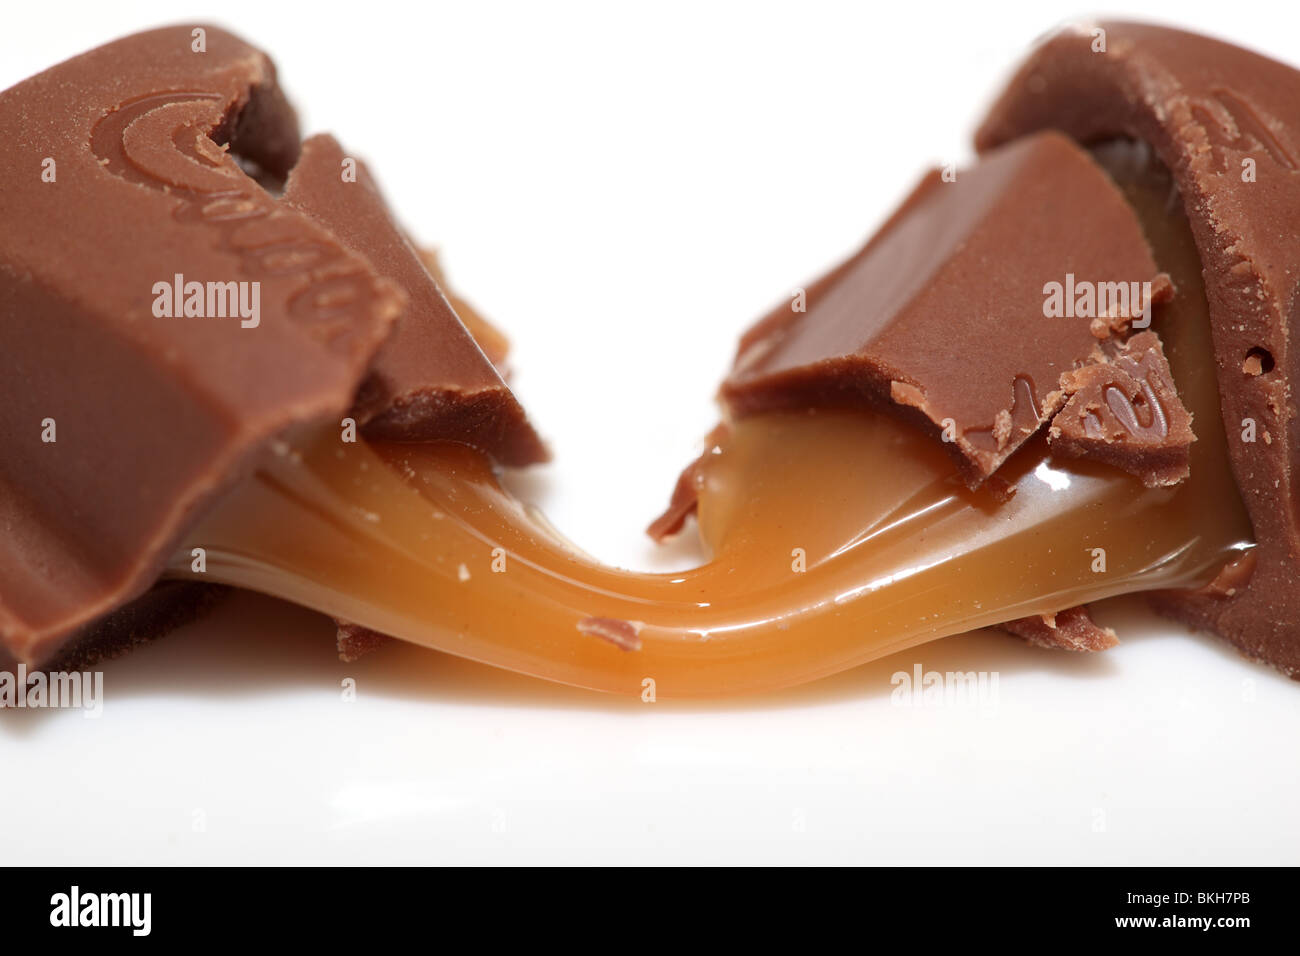 Cadbury's caramel chocolate Stock Photo